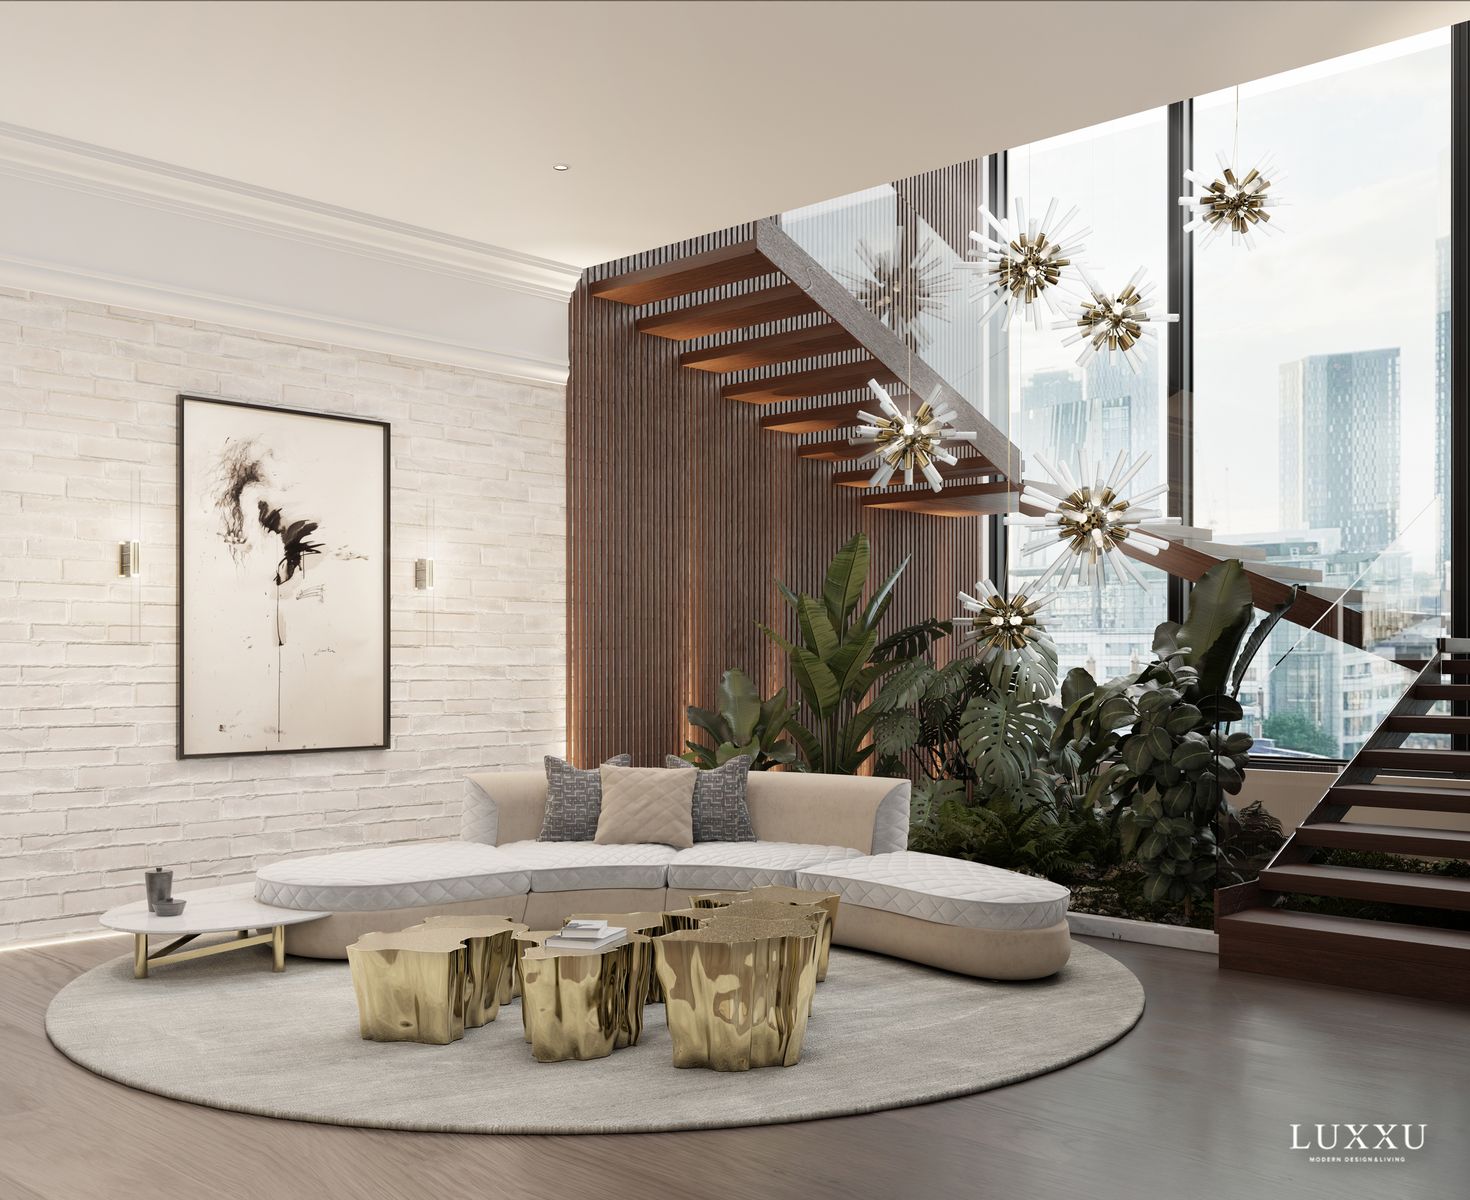 LUXXU Luxury Houses: Brilliant Design Inspirations